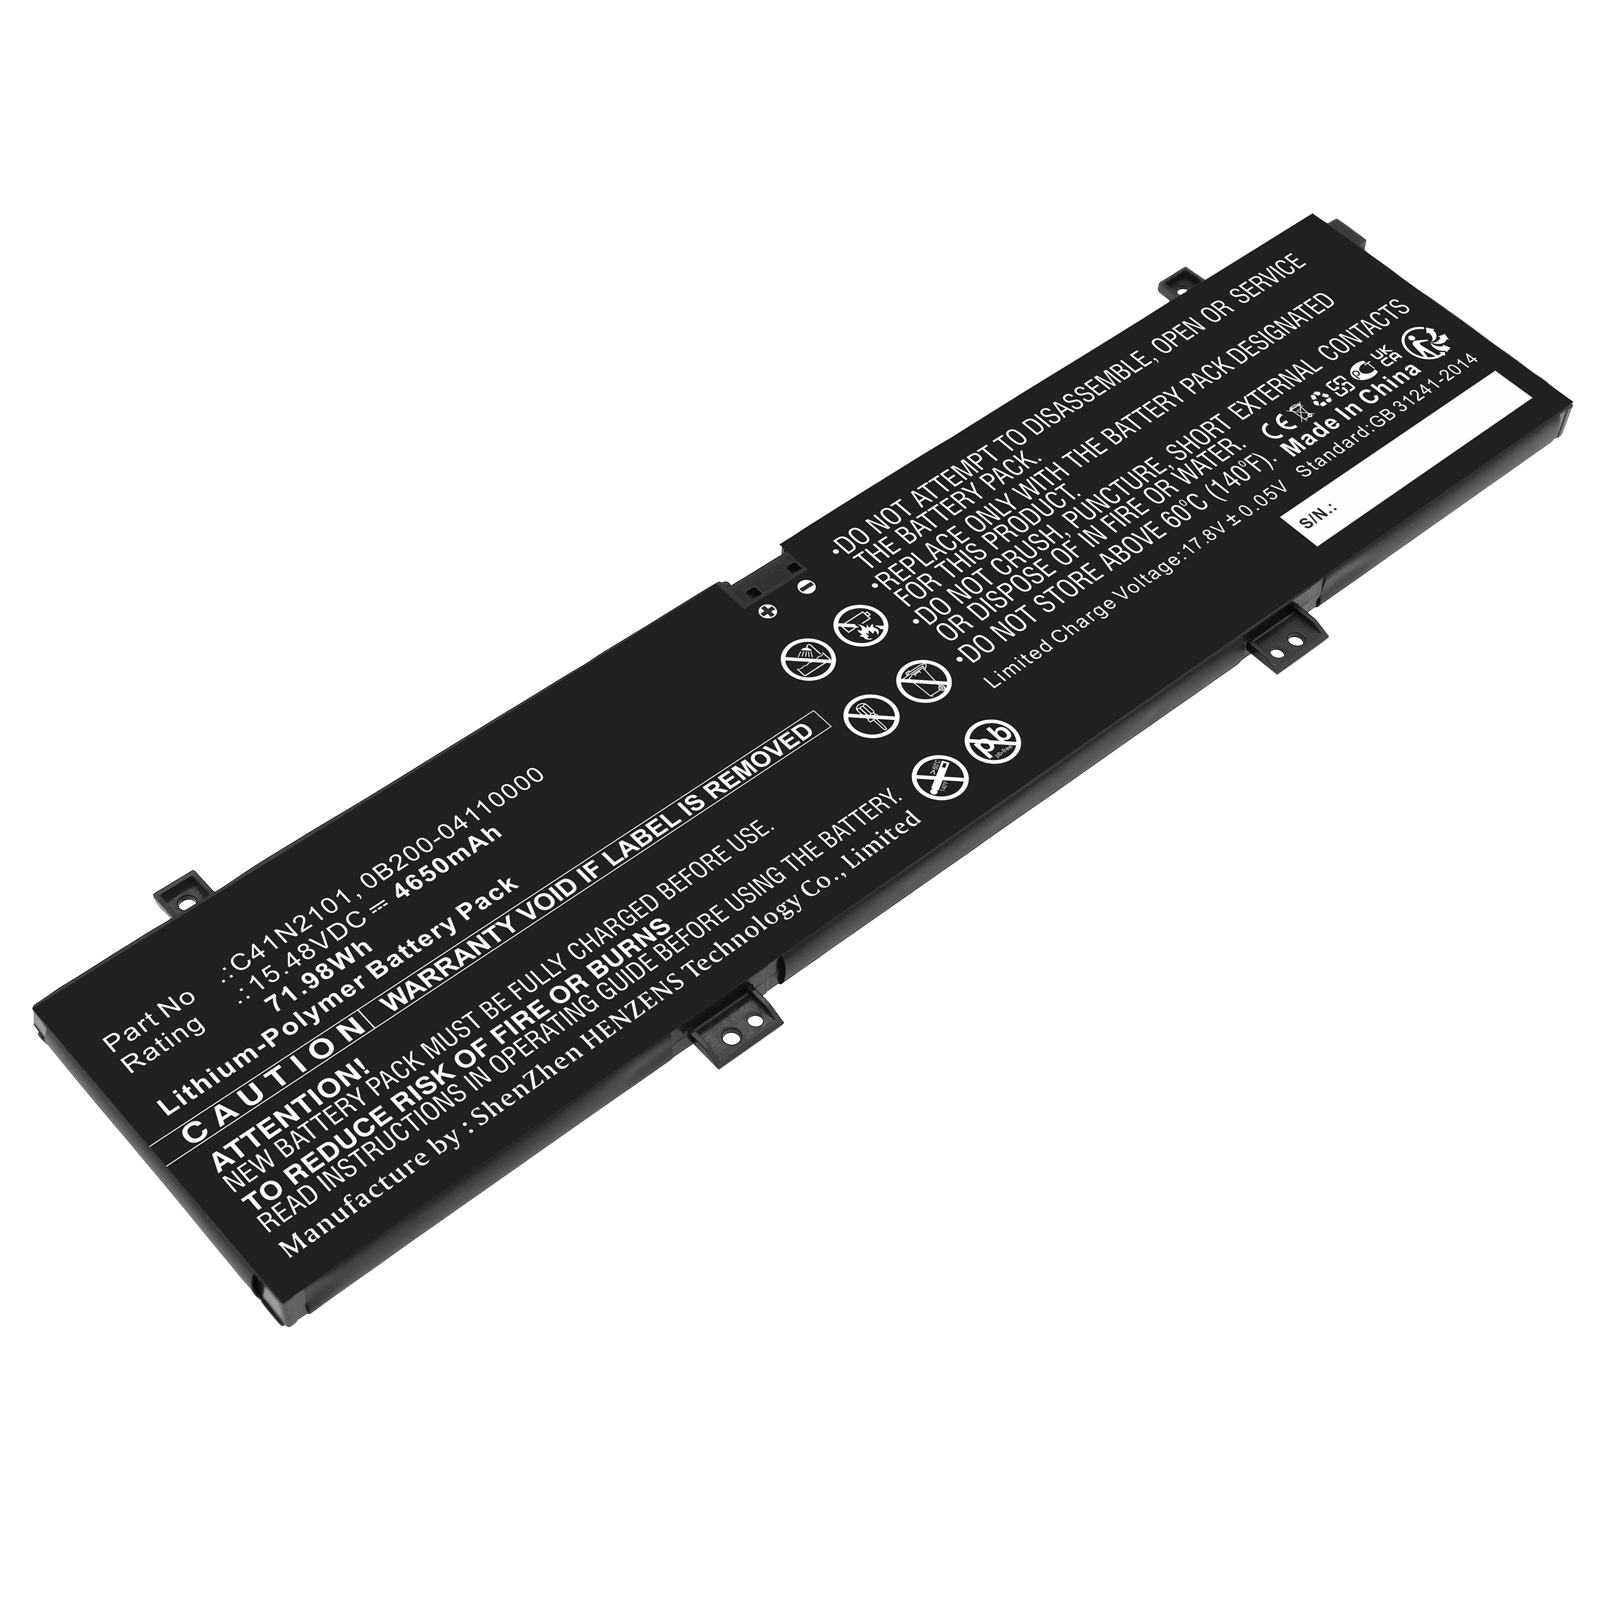 Synergy Digital Laptop Battery, Compatible with Asus C41N2101 Laptop Battery (Li-Pol, 15.48V, 4650mAh)